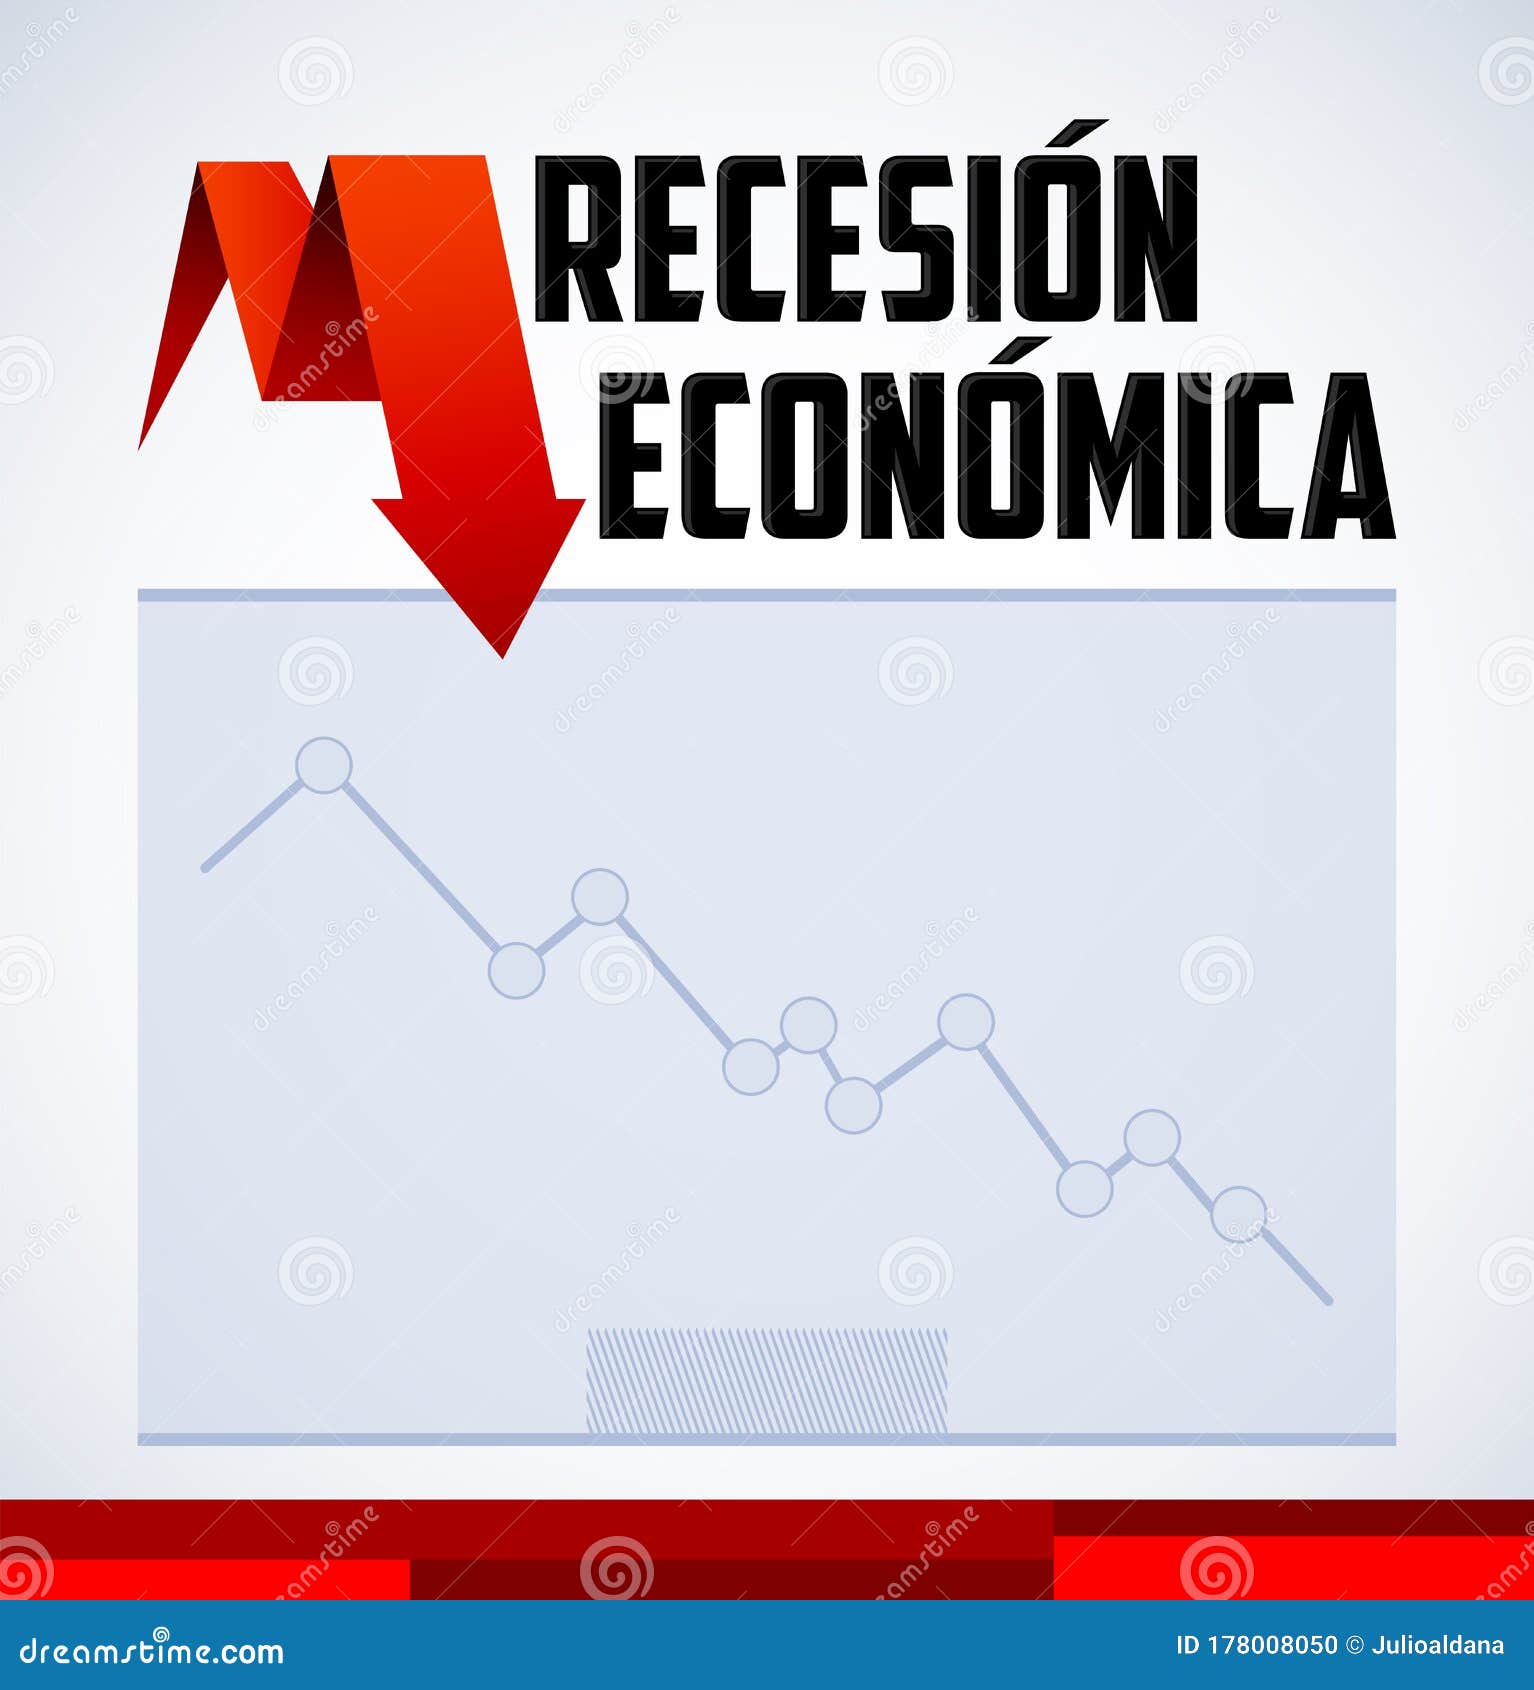 recesion economica, economic recession in spanish text  .